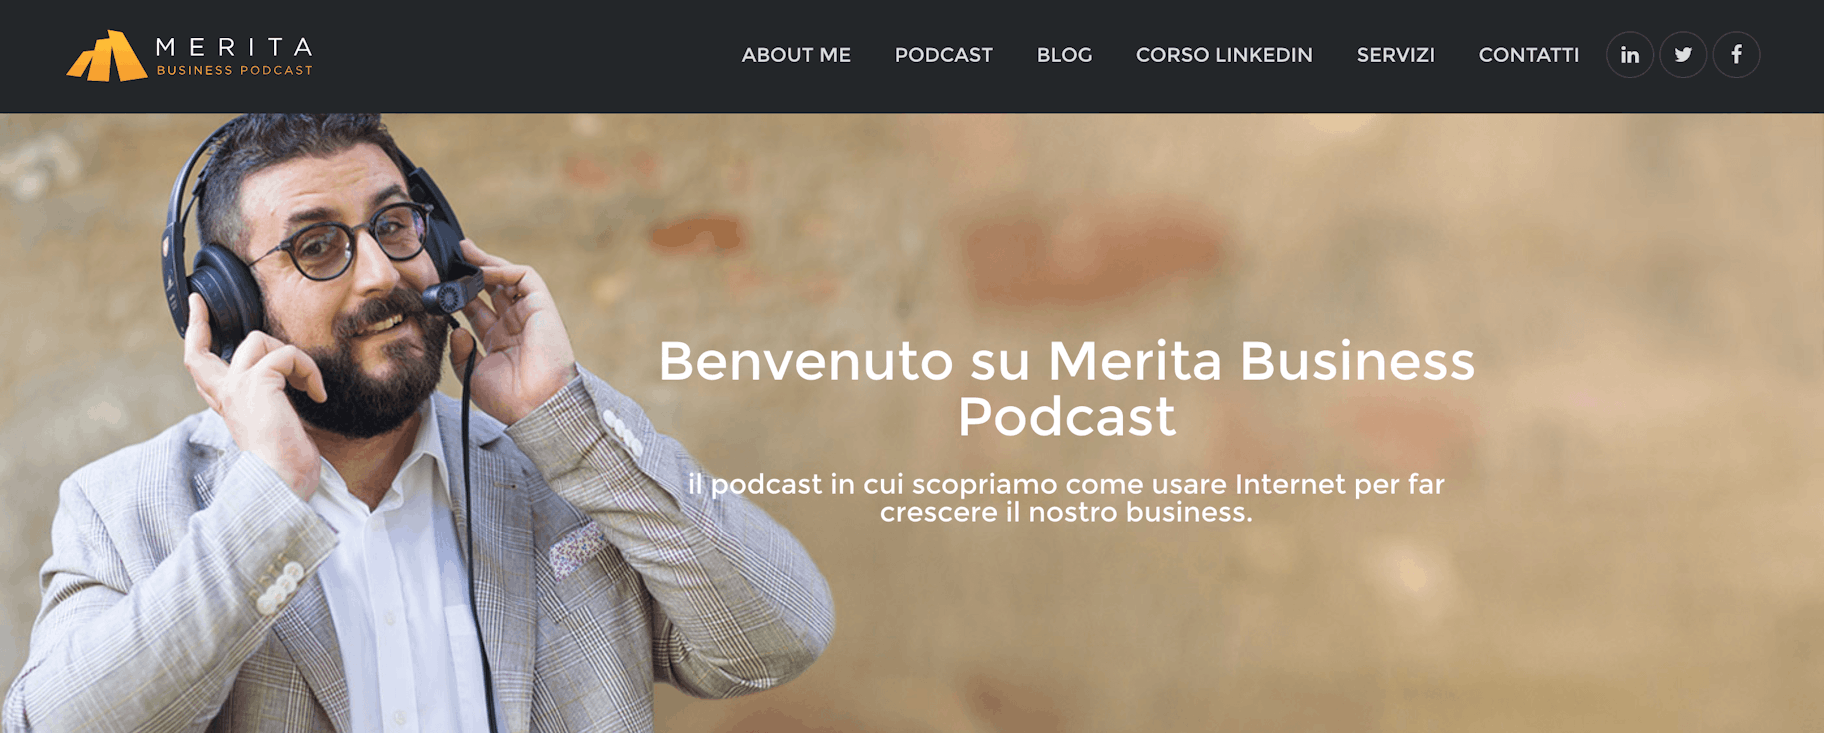 merita business podcast